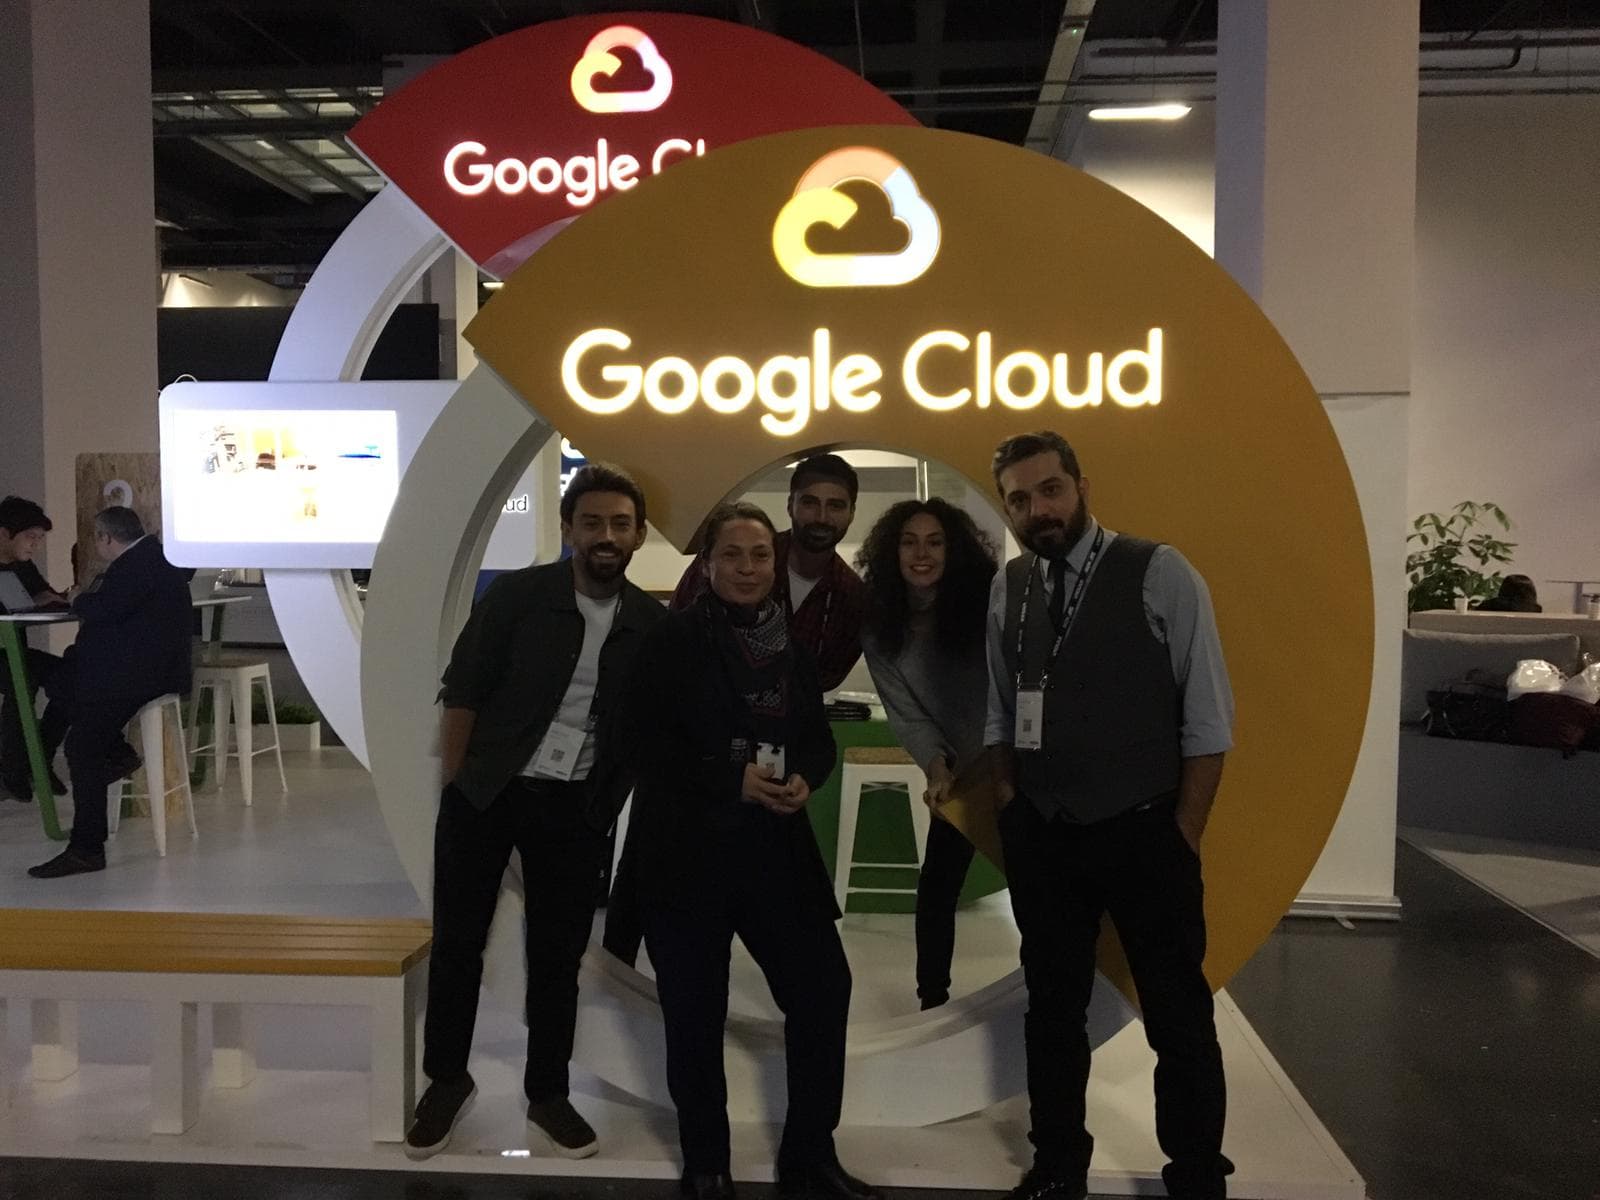 Google SAP Cloud Booth - 5